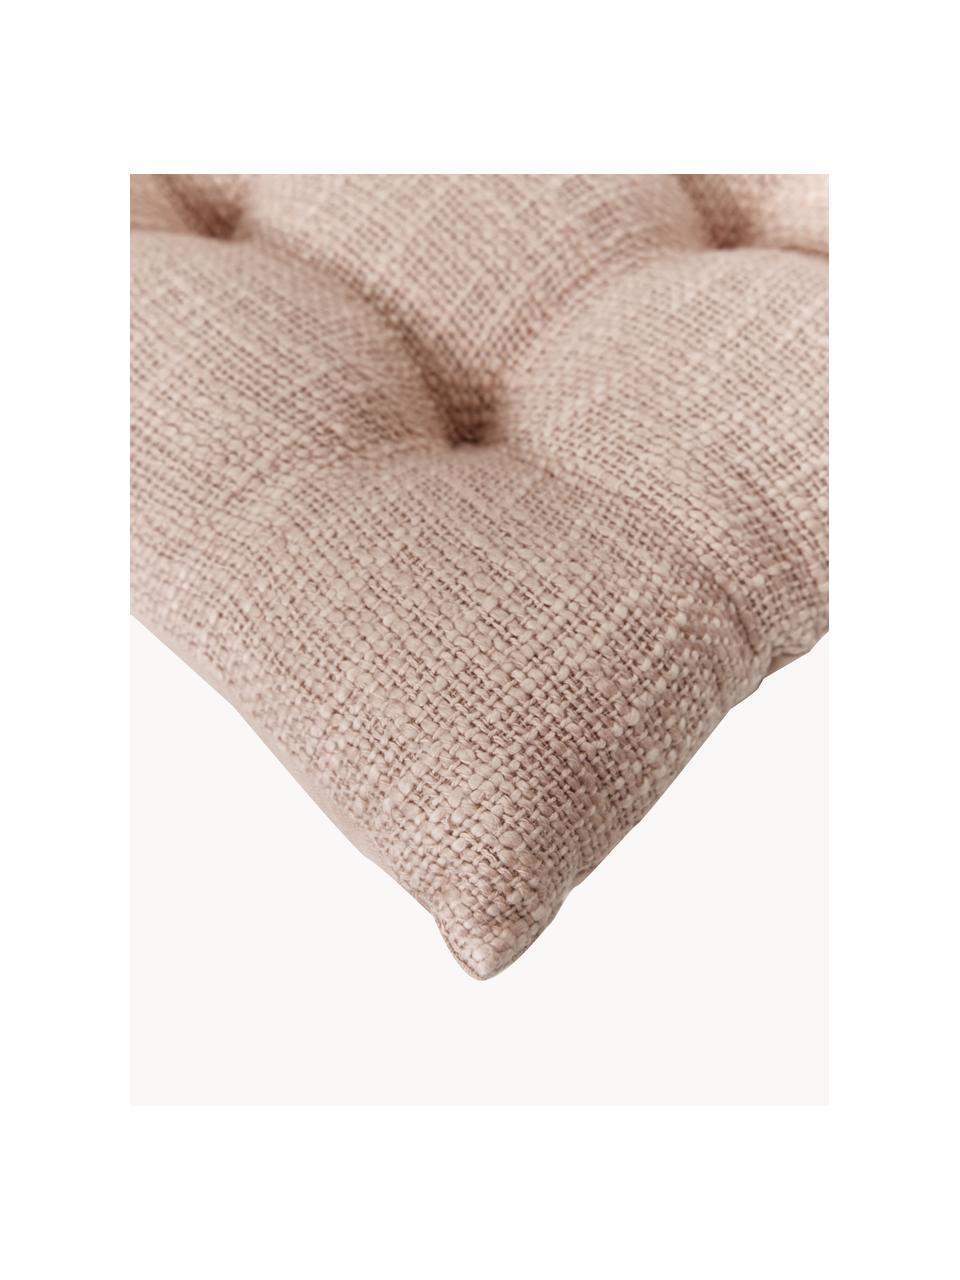 Cojín de asiento de algodón Sasha, Tapizado: 100% algodón, Rosa, An 40 x L 40 cm